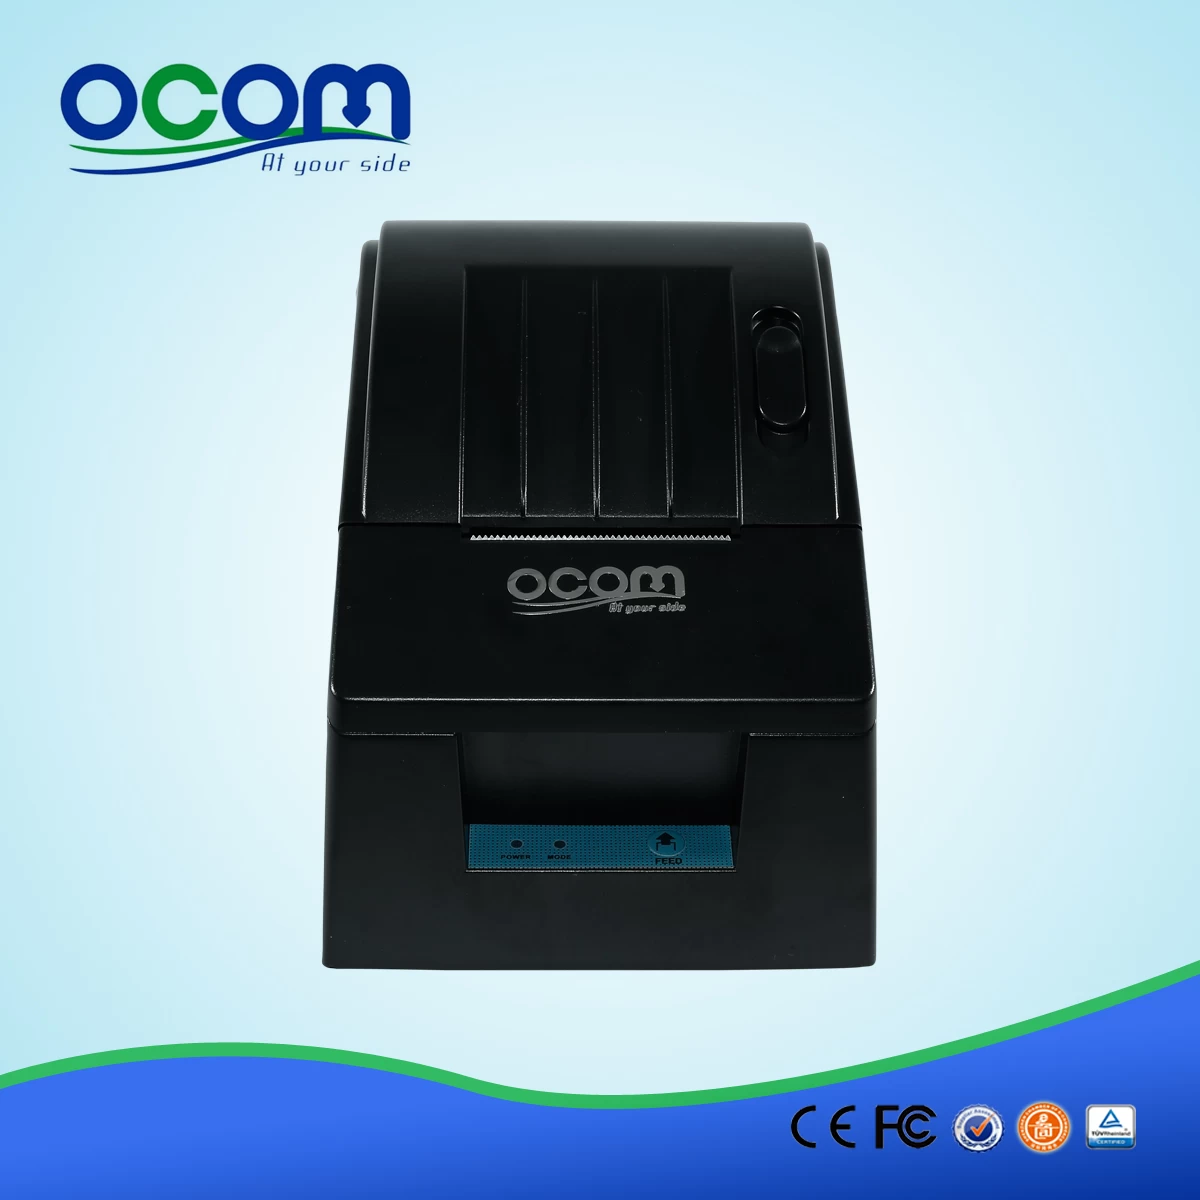 58mm High Printing Speed Thermal Receipt Printer China Manufacturer